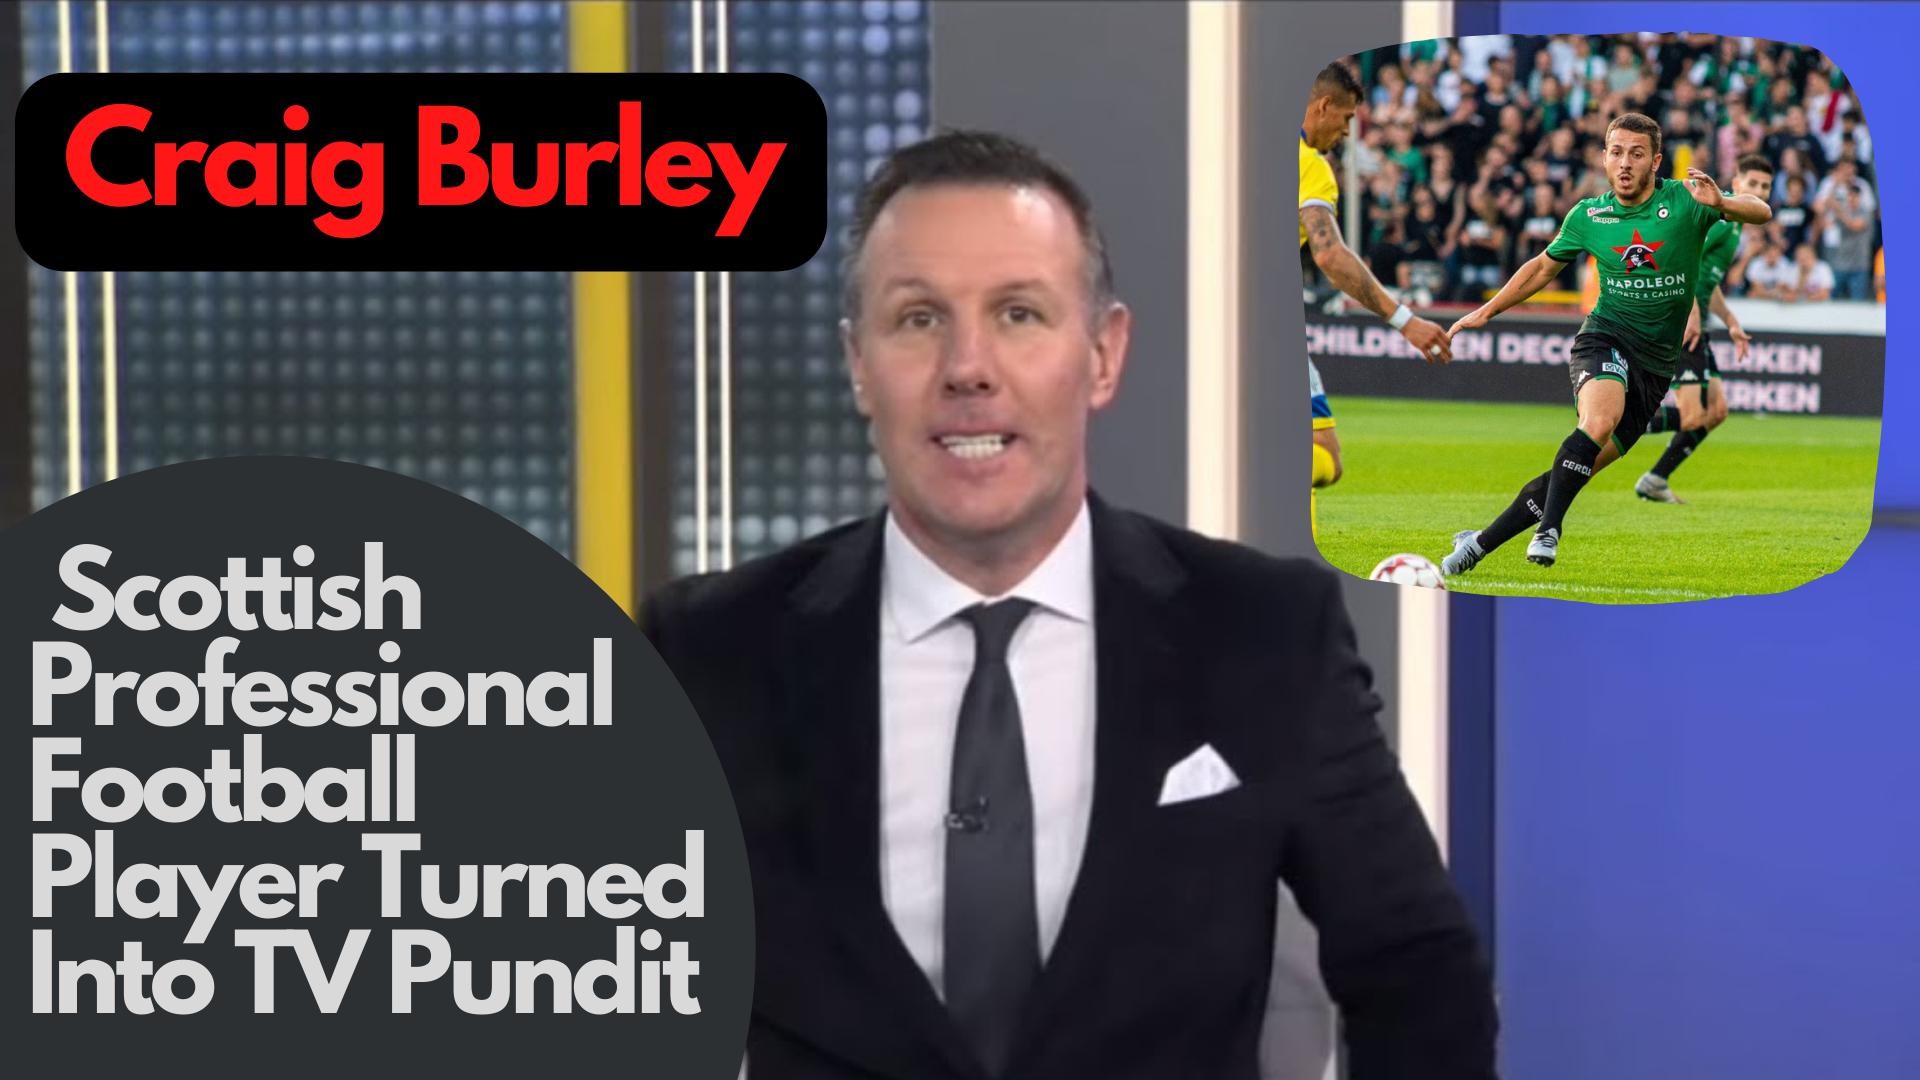 Craig Burley - Scottish Professional Football Player Turned Into TV Pundit